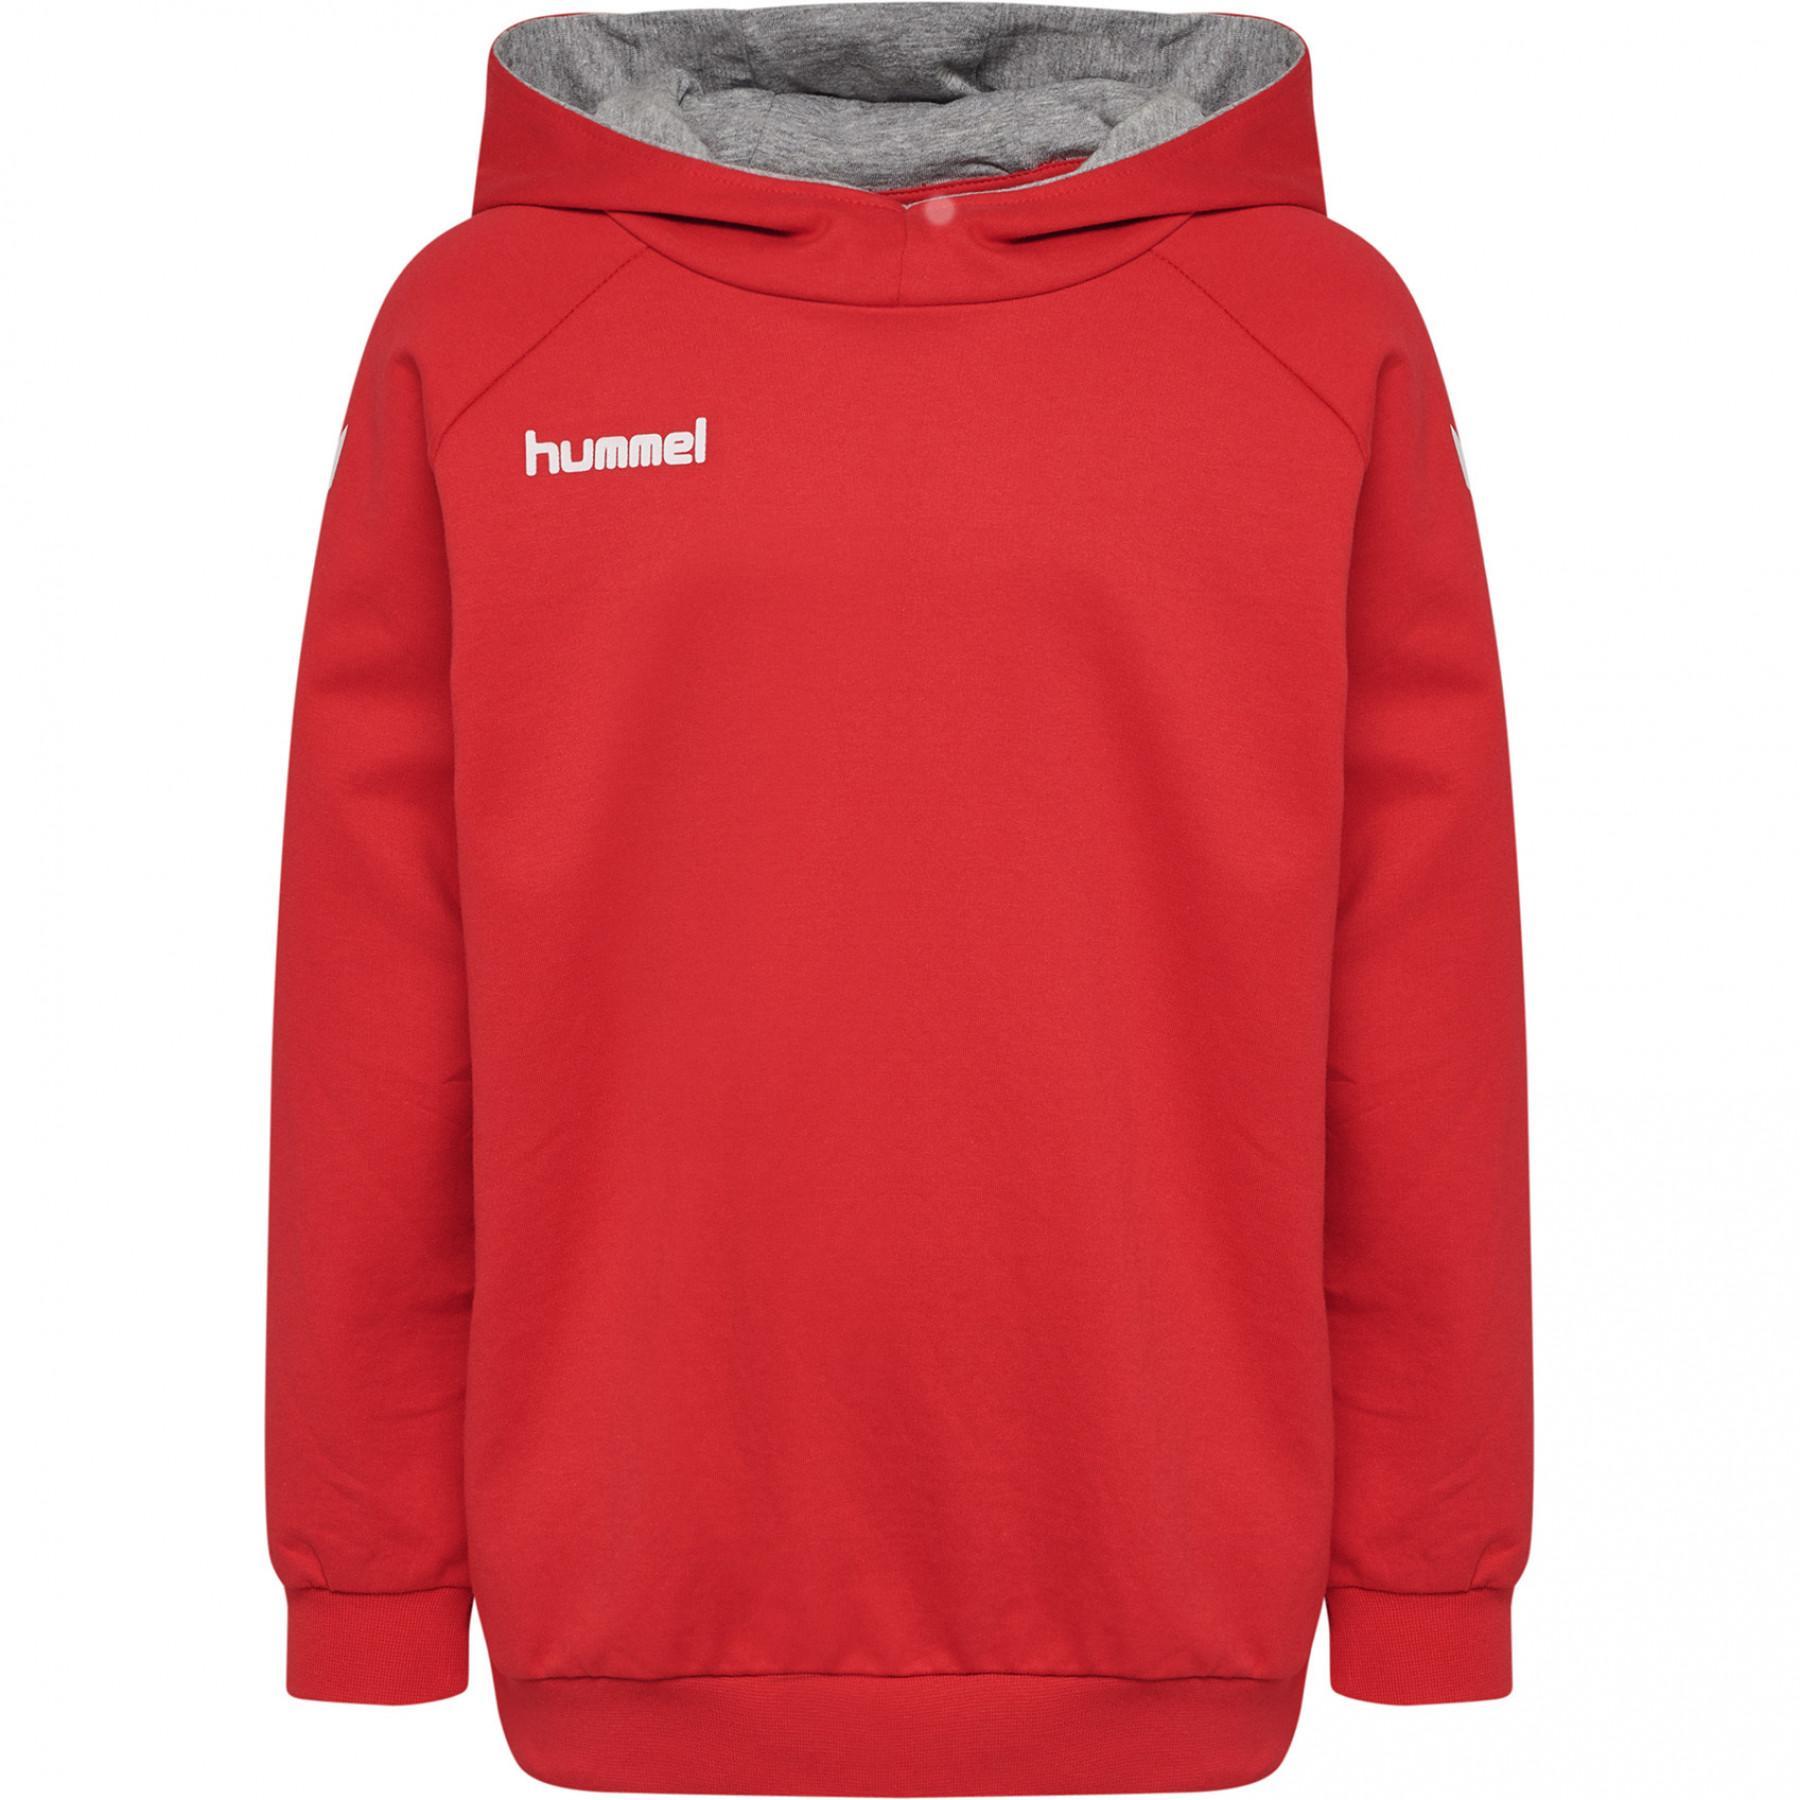 Hummel hmlGO - for children cotton wear sweatshirt - Handball Hooded Sweatshirts wear - Men\'s